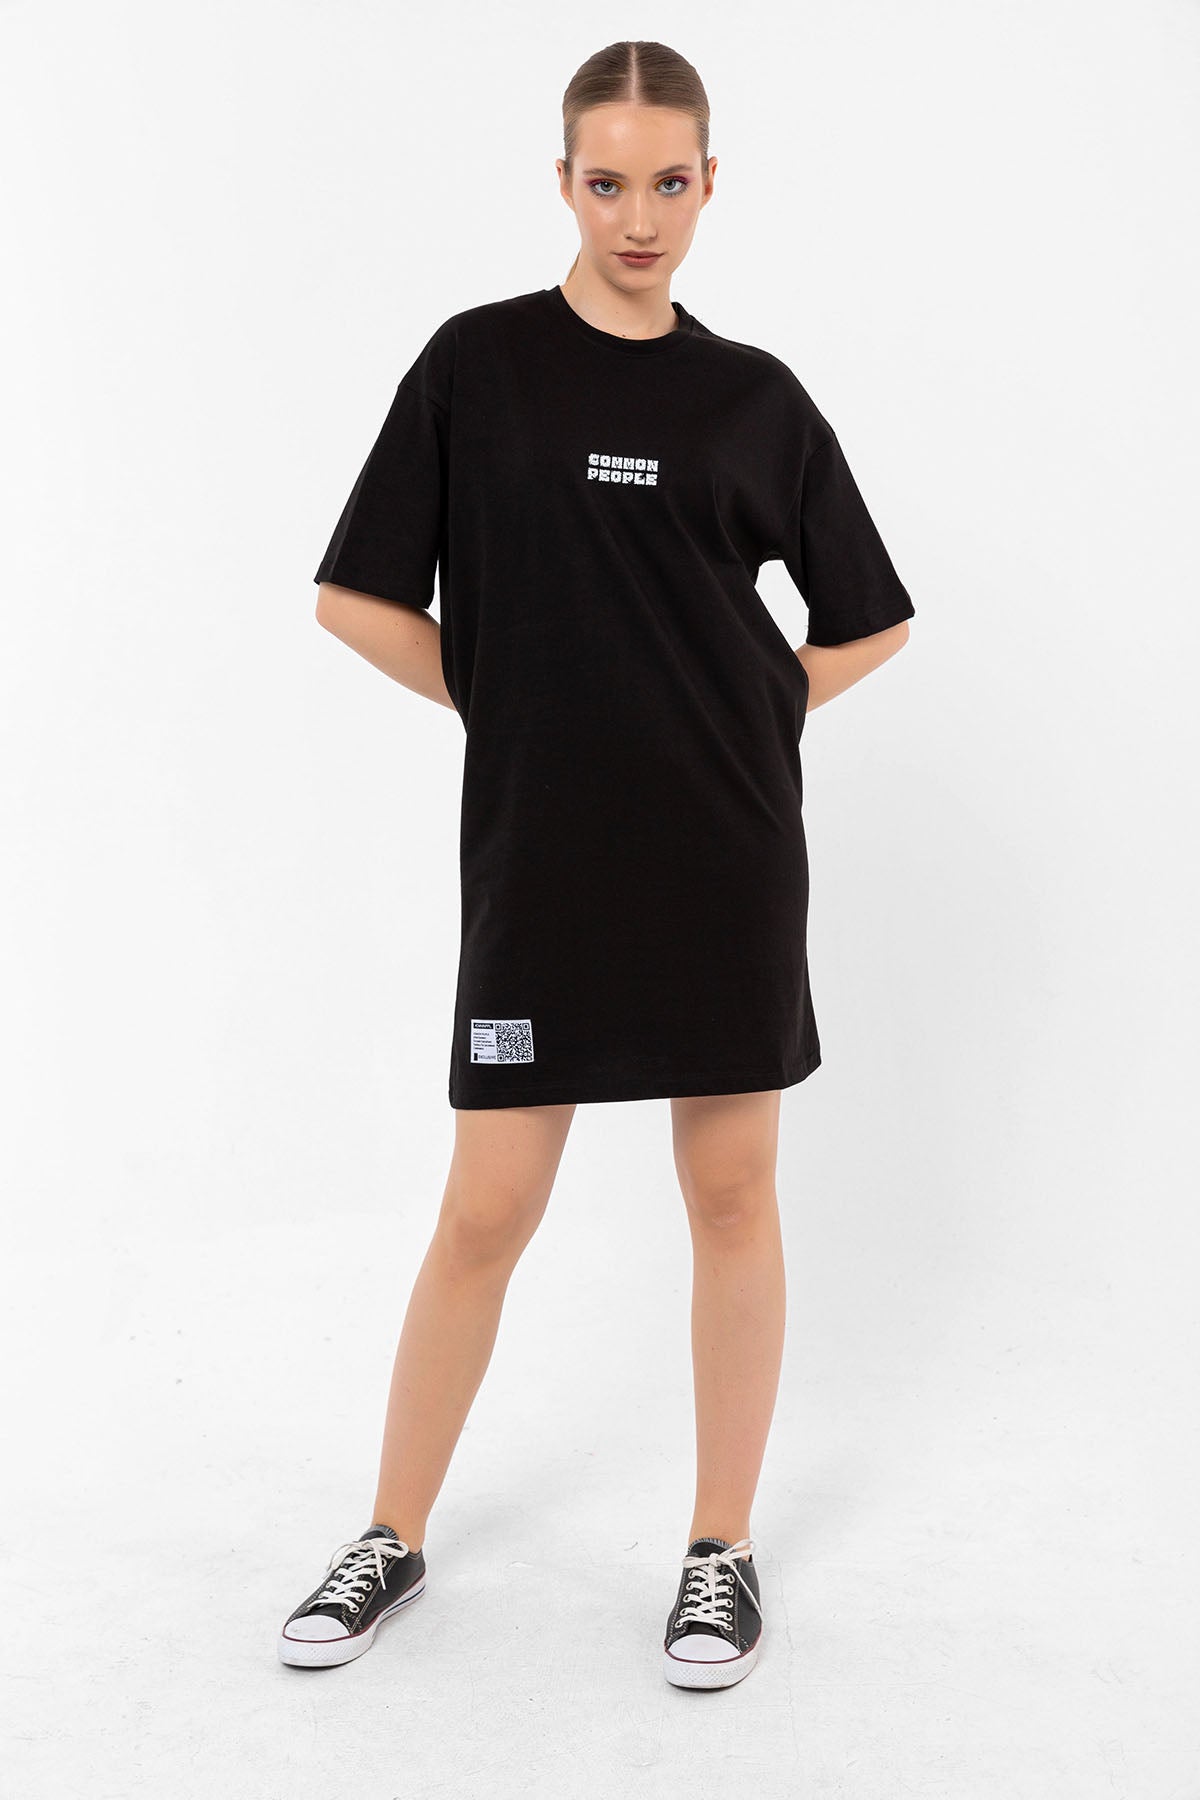 To Be Siyah Oversize T-shirt Elbise